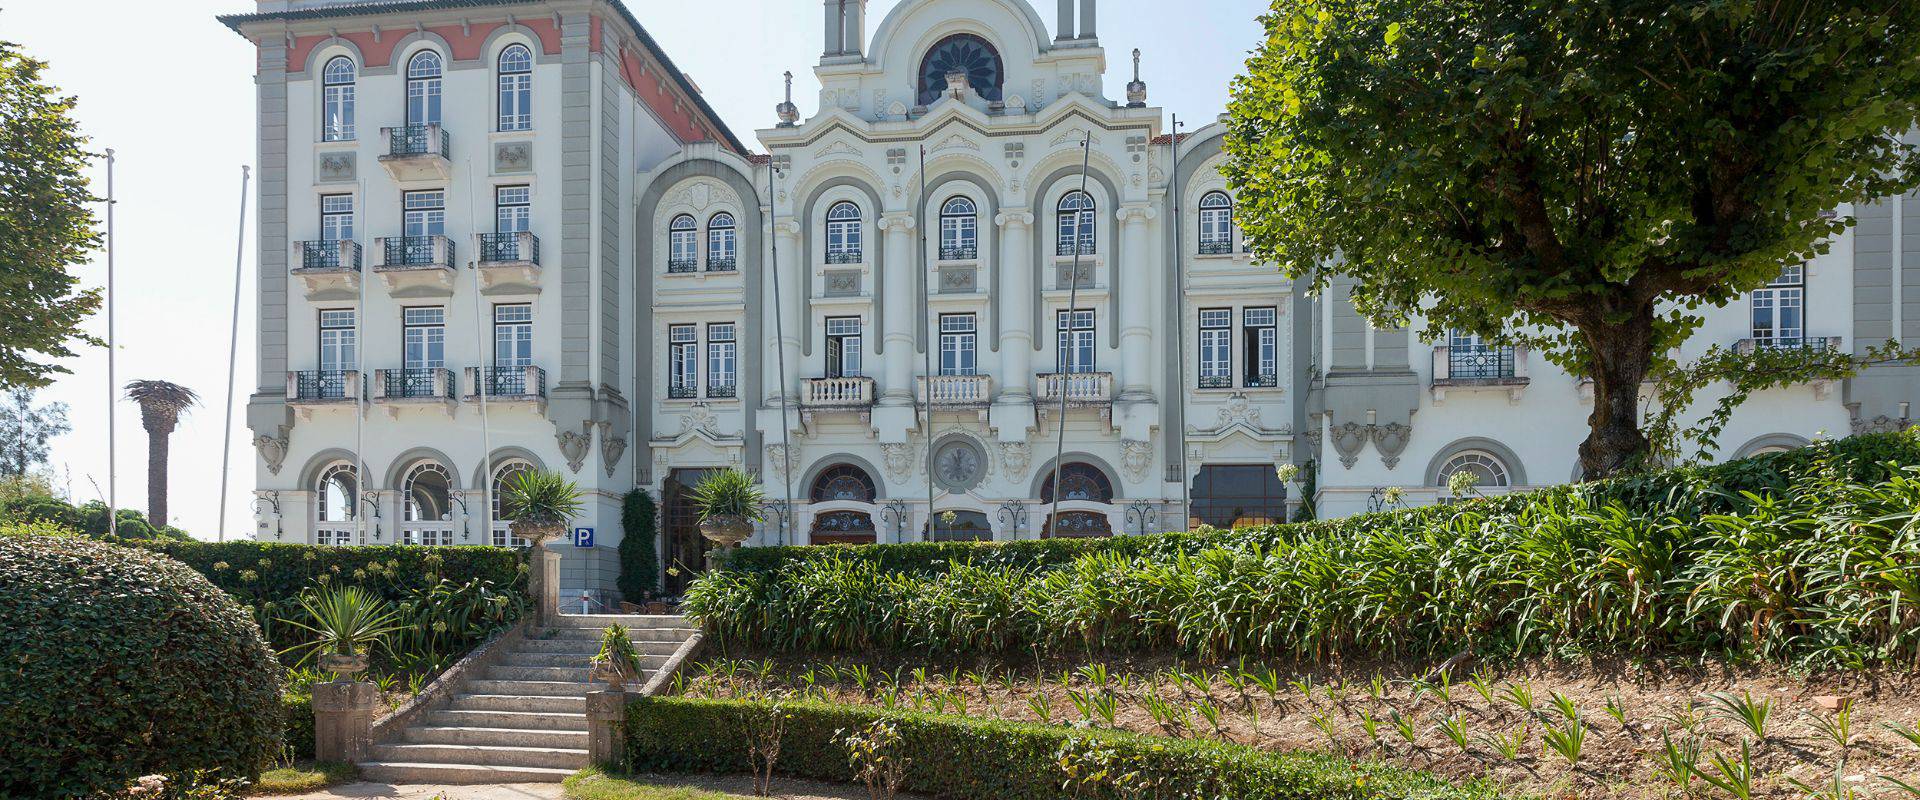   Curia Palace Hotel Coimbra